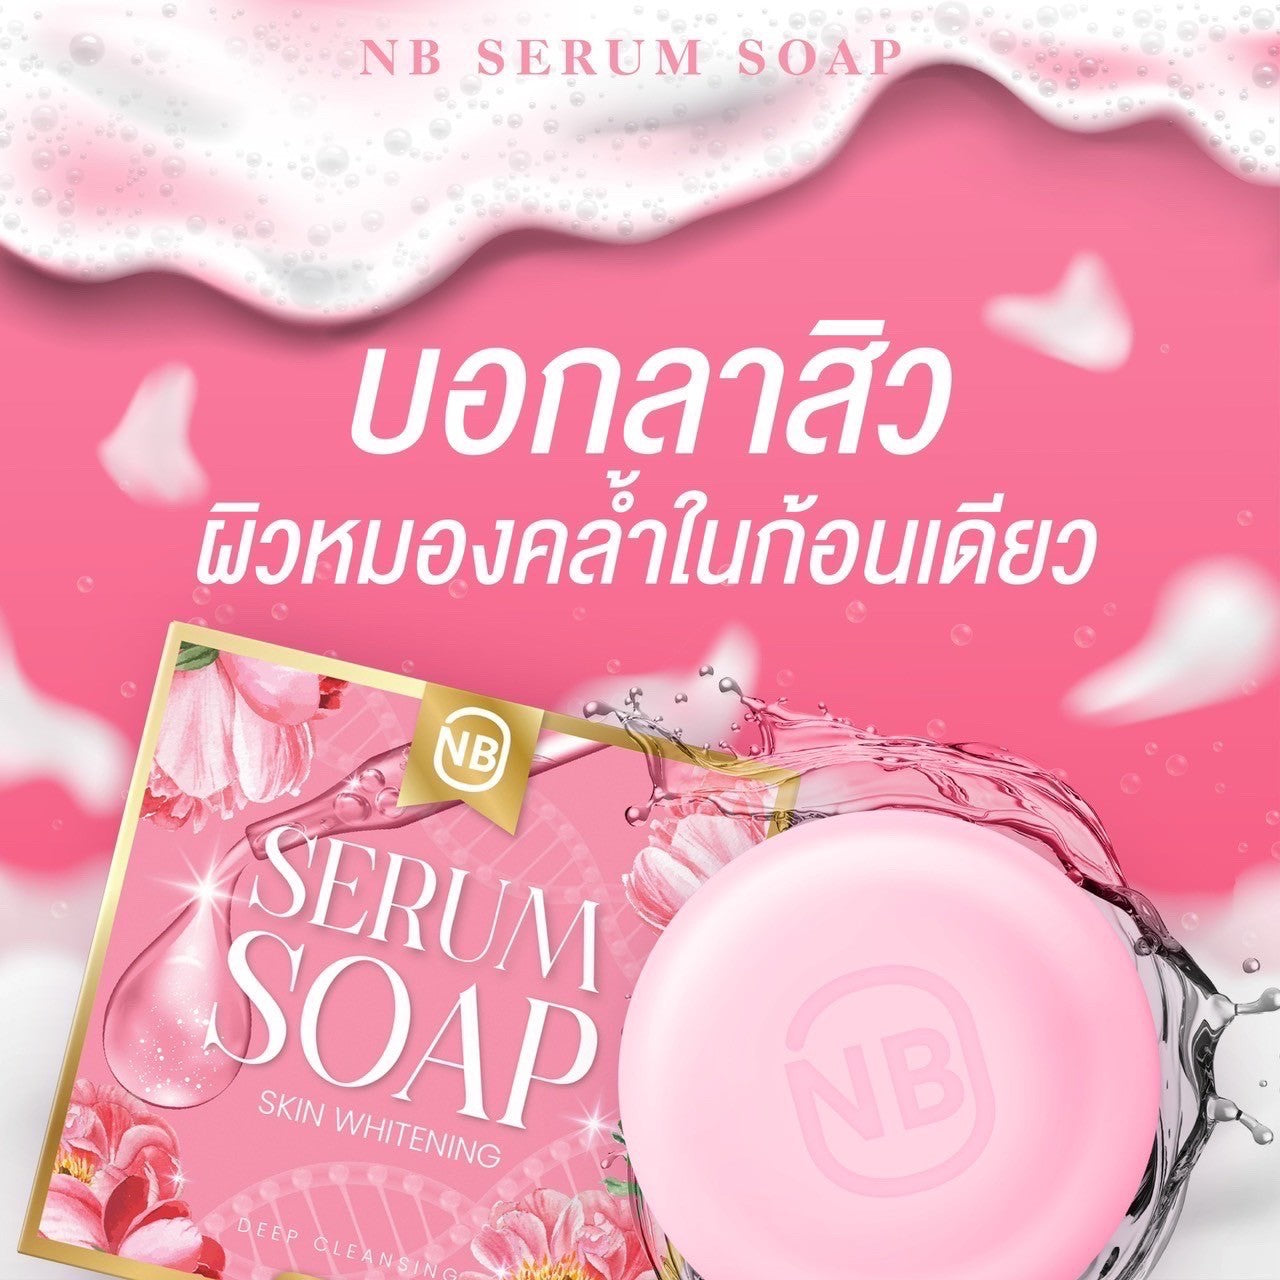 NB SERUM SOAP